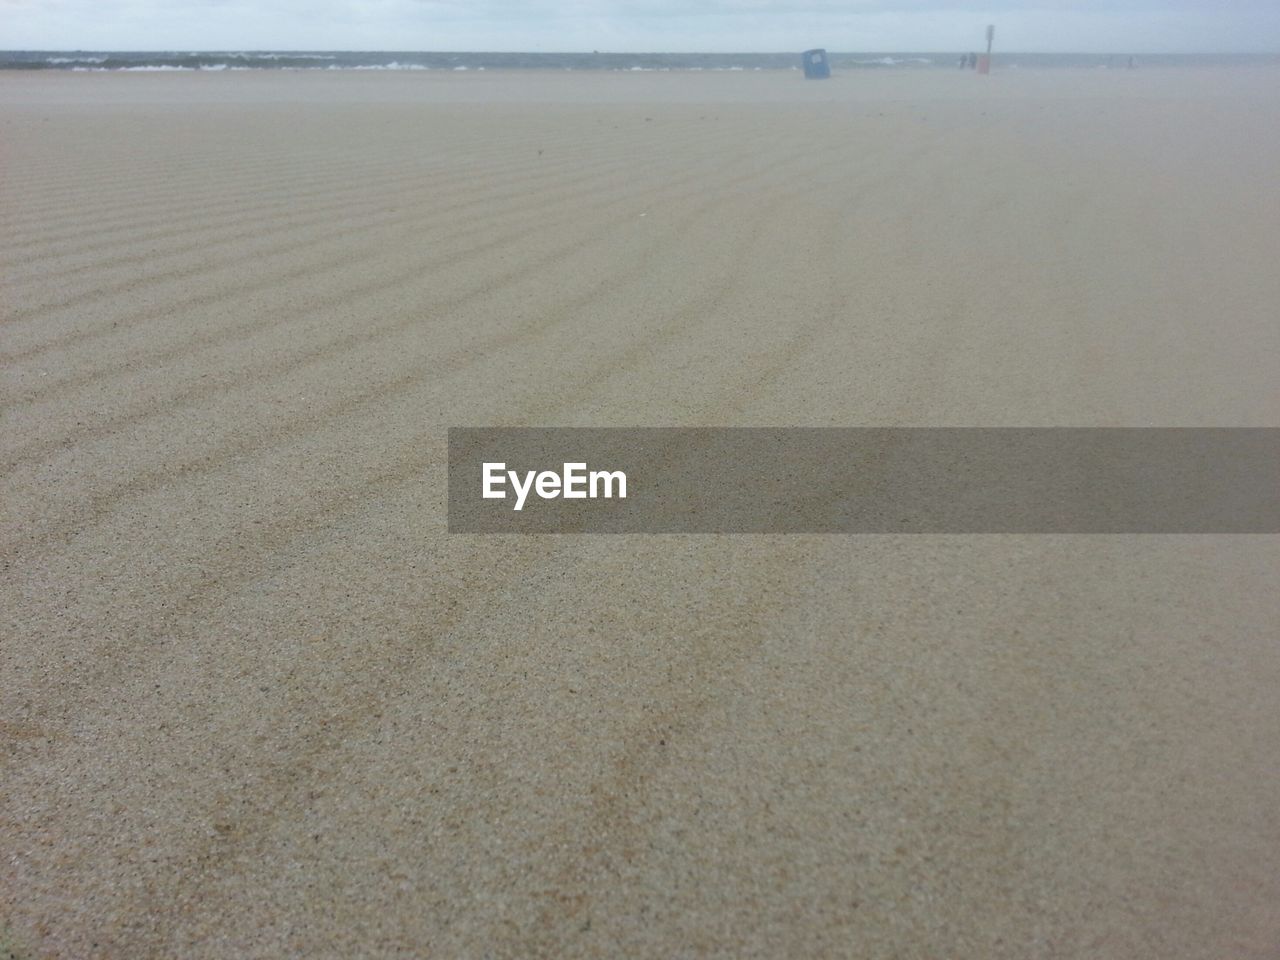 VIEW OF SANDY BEACH